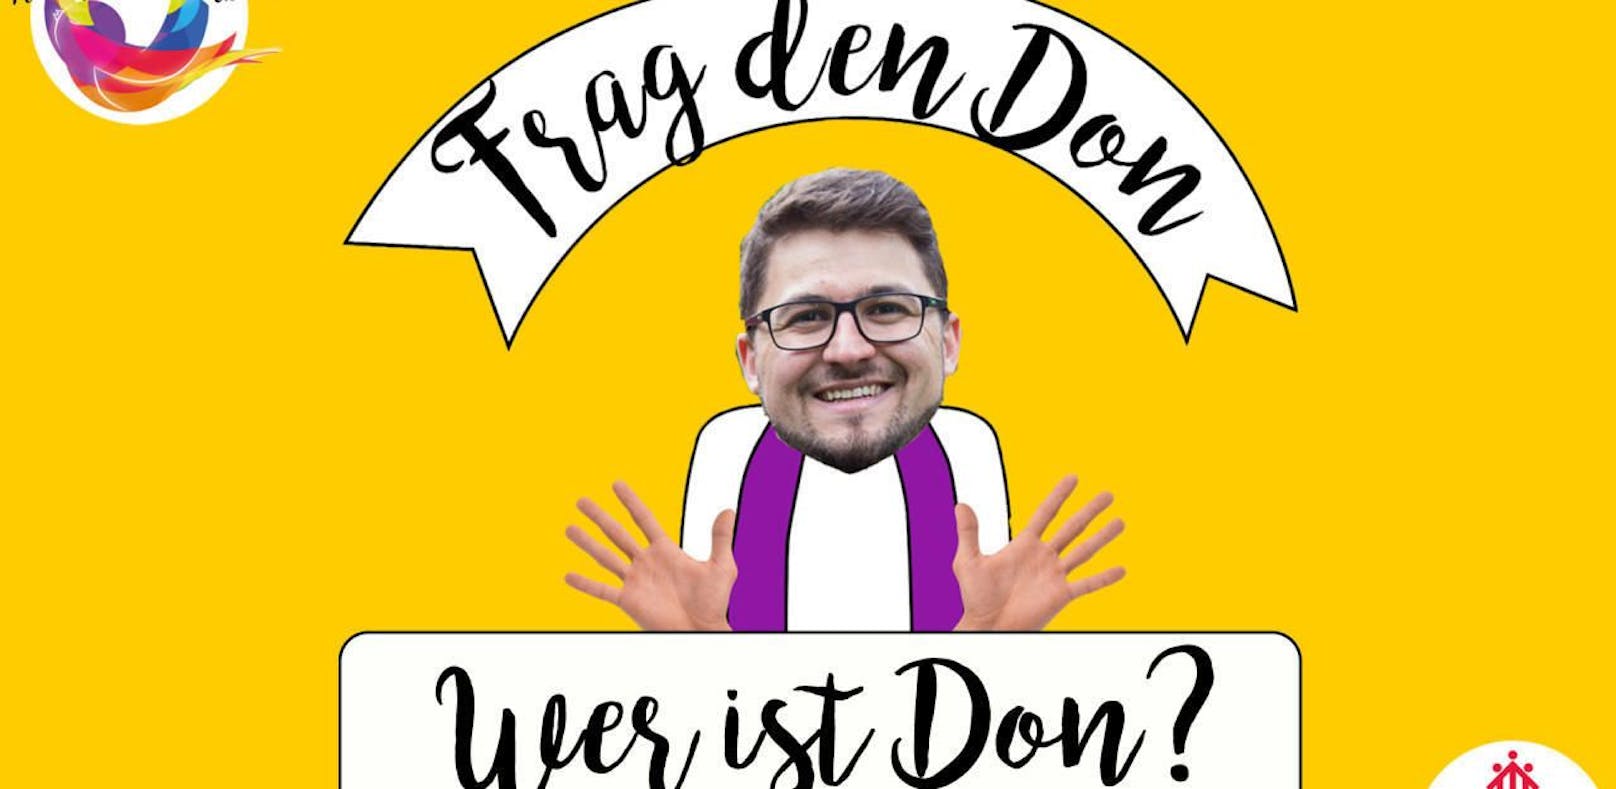 &quot;Frag den Don&quot;: Pater Johannes Haas beantwortet per Video spannende Glaubensfragen.